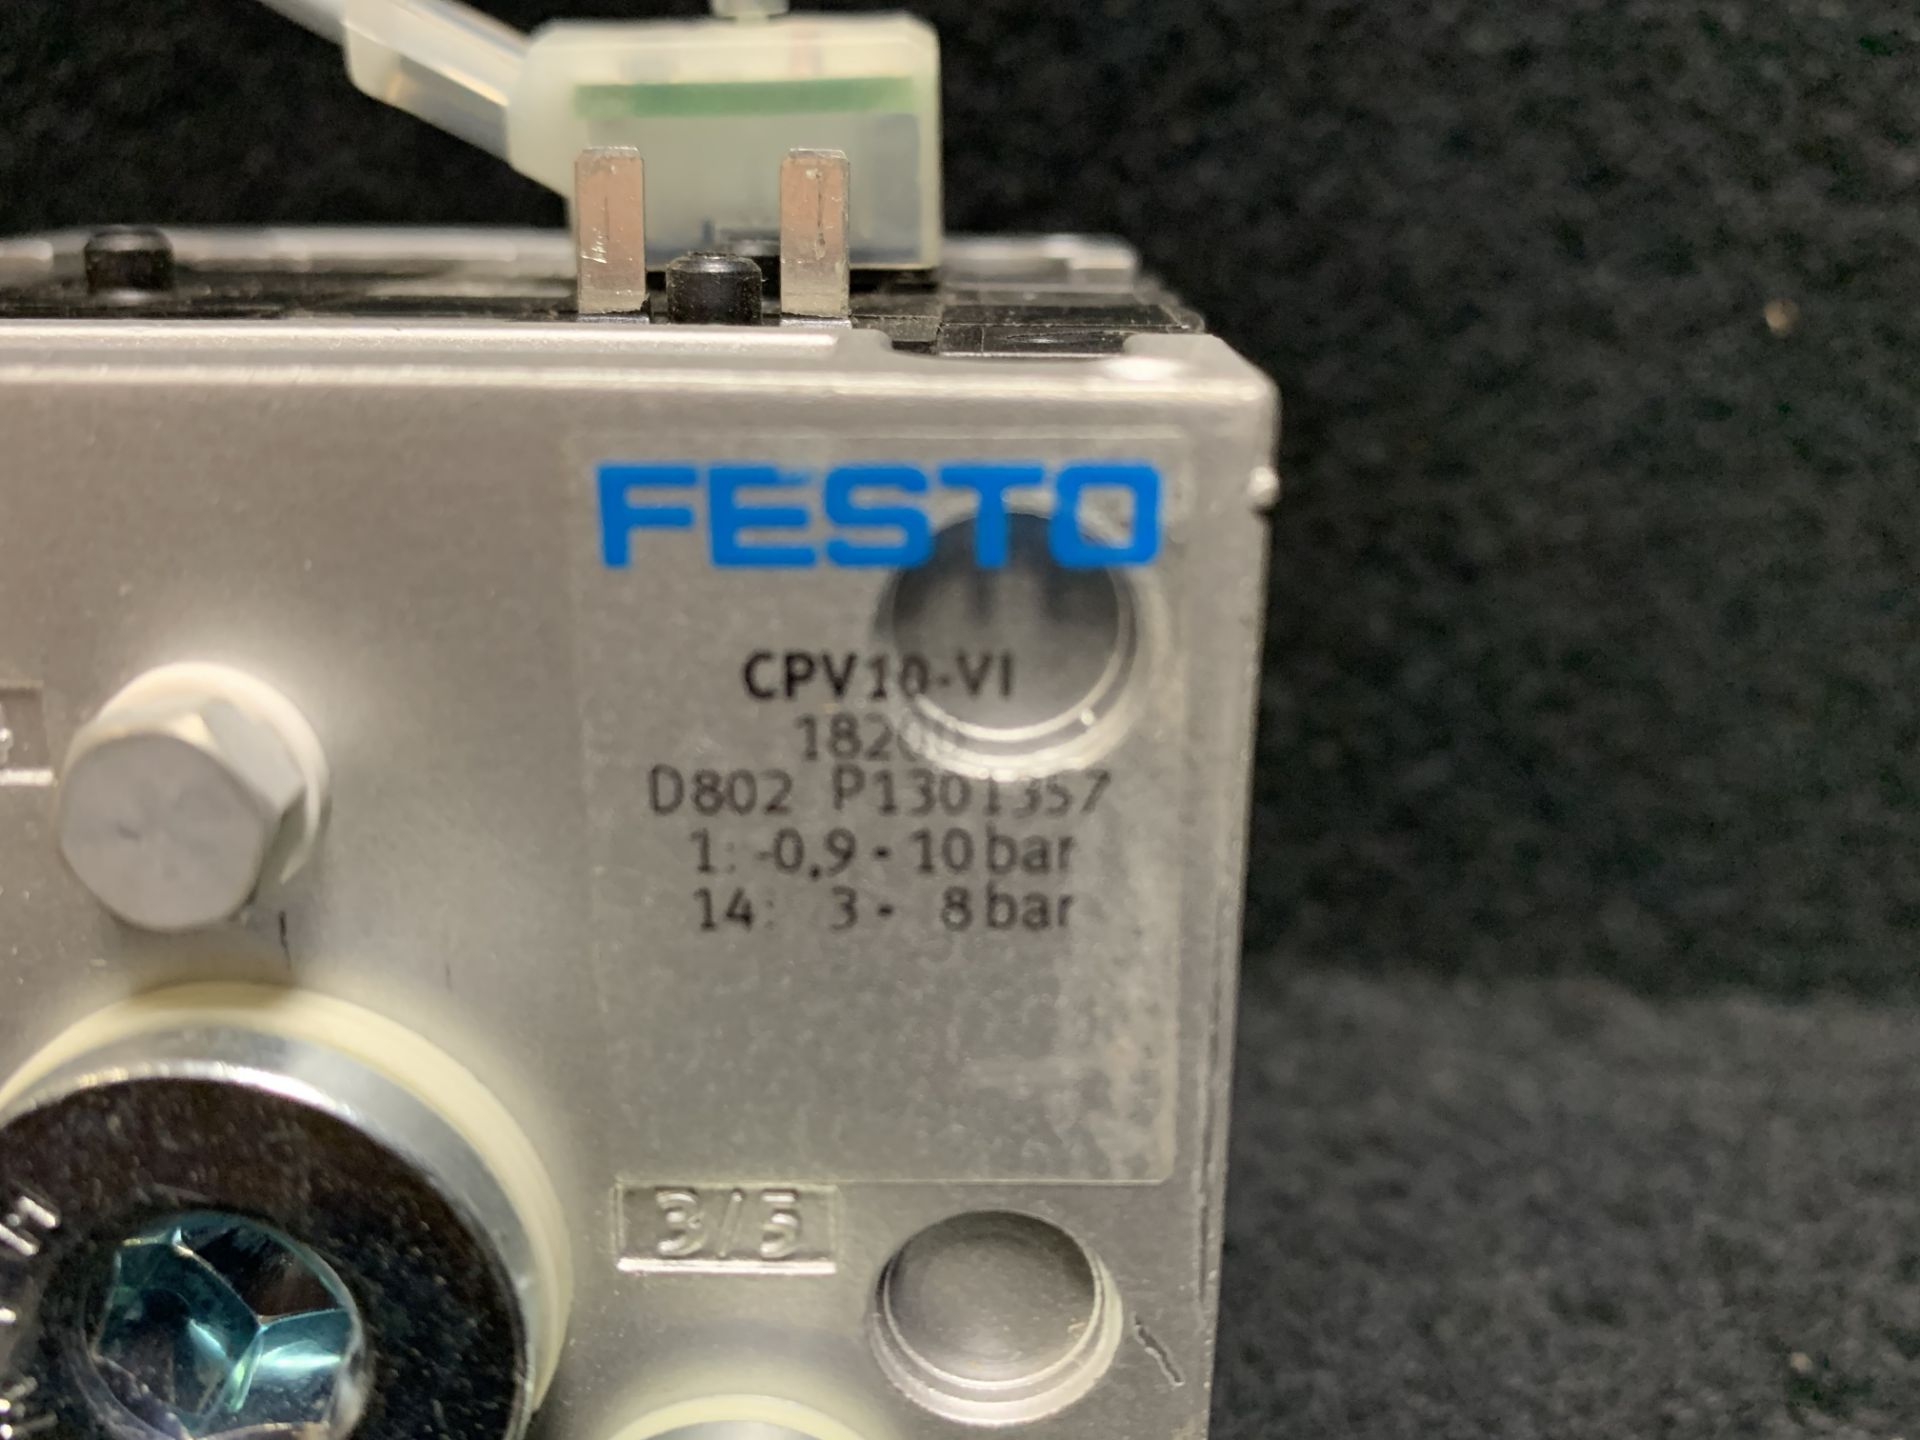 FESTO ELECTRIC VALVE MANIFOLD CPV10-VI 18200 - Image 3 of 6